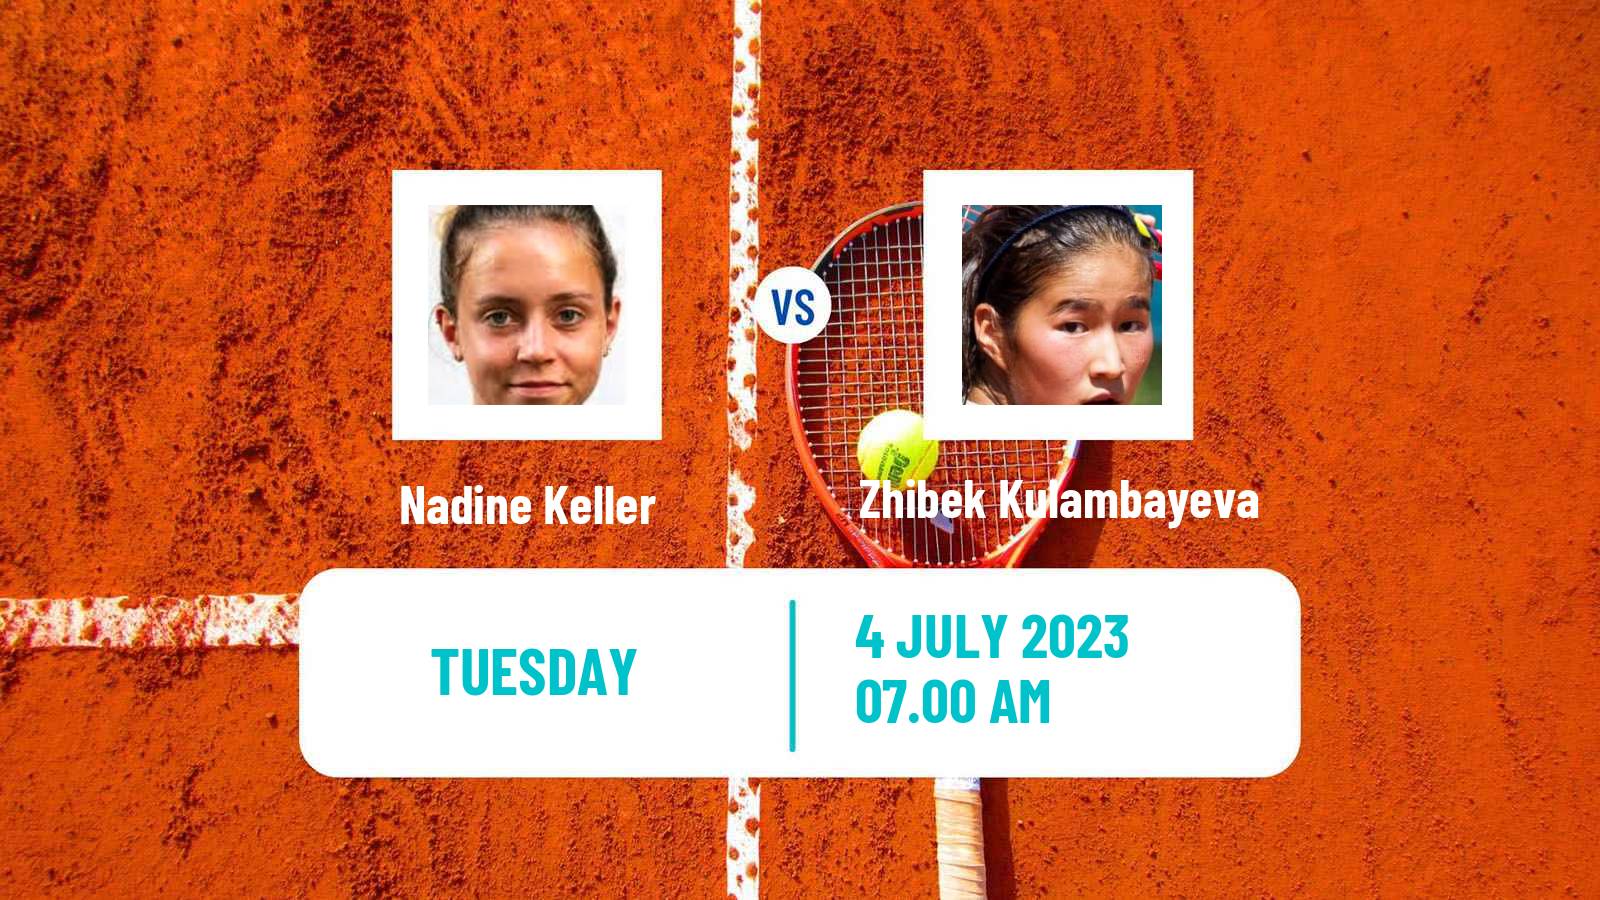 Tennis ITF W25 Stuttgart Vaihingen Women Nadine Keller - Zhibek Kulambayeva